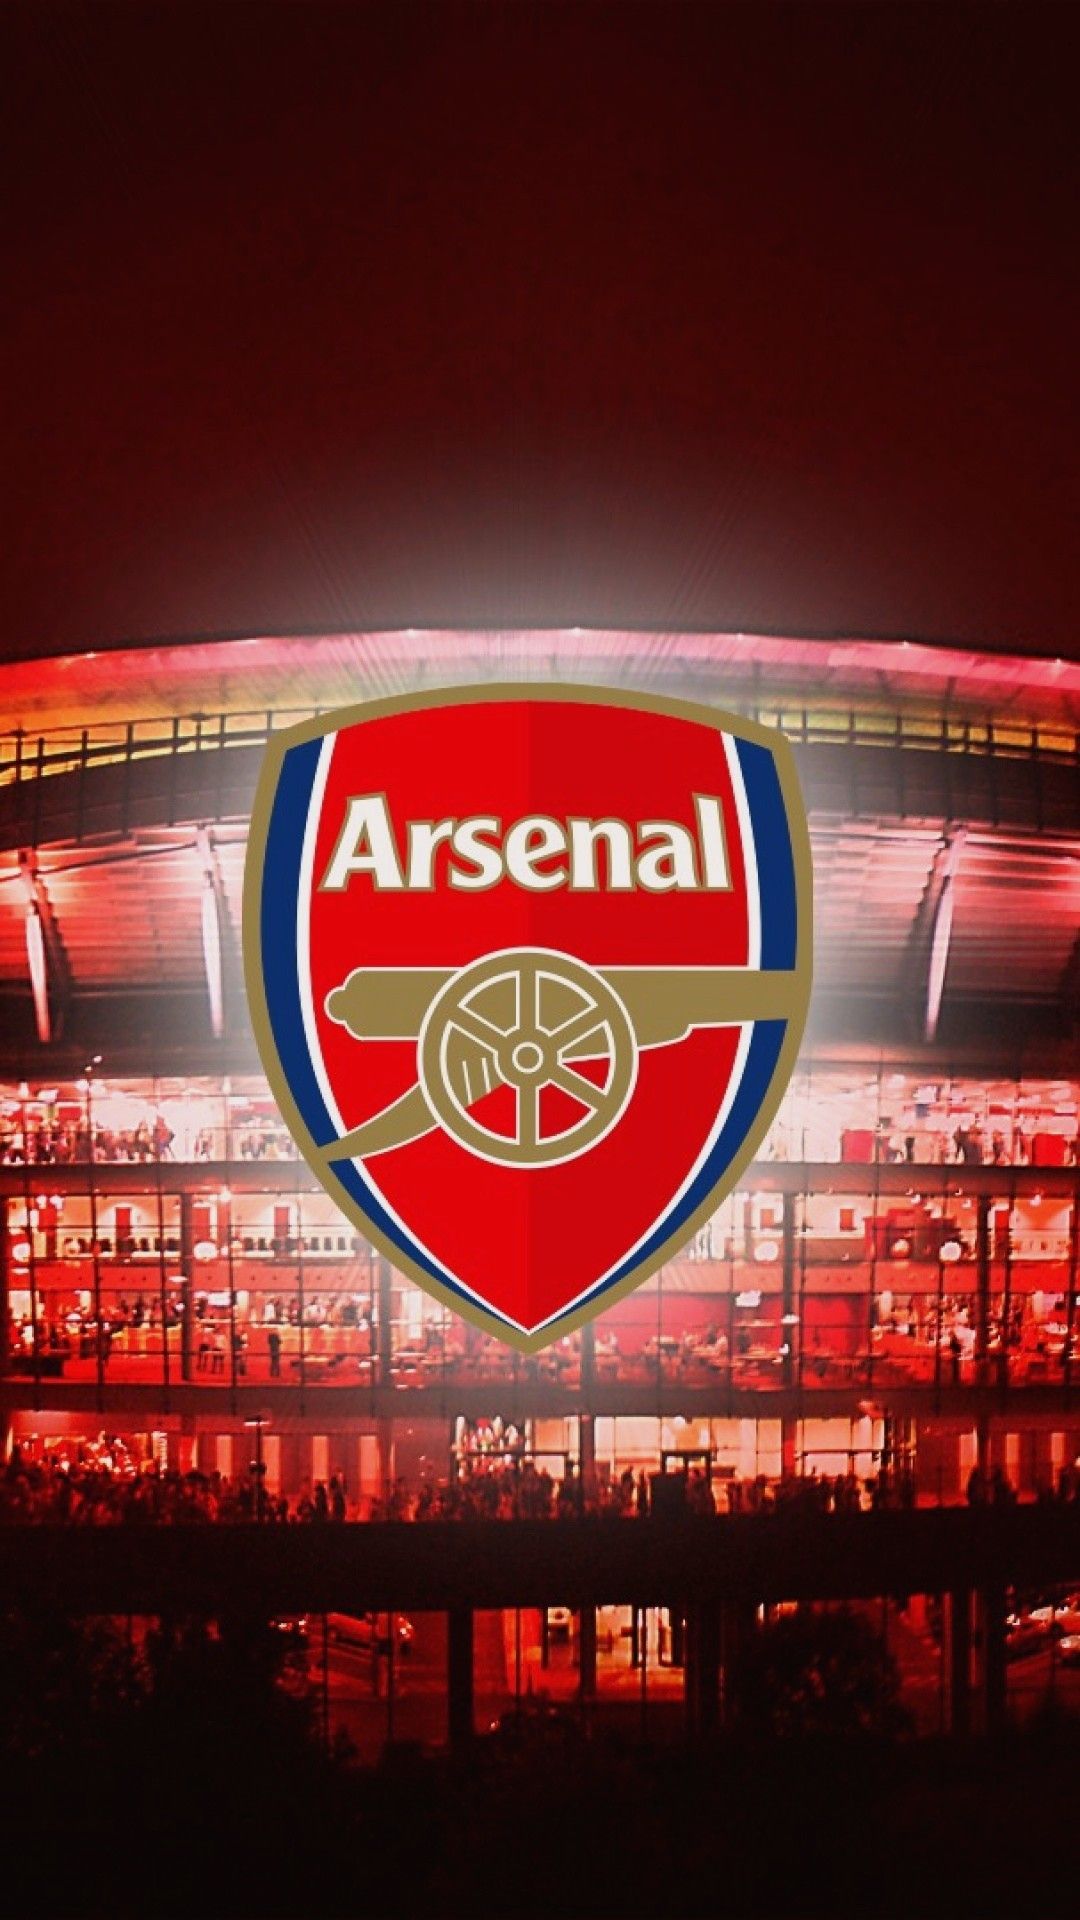 Arsenal FC Wallpaper